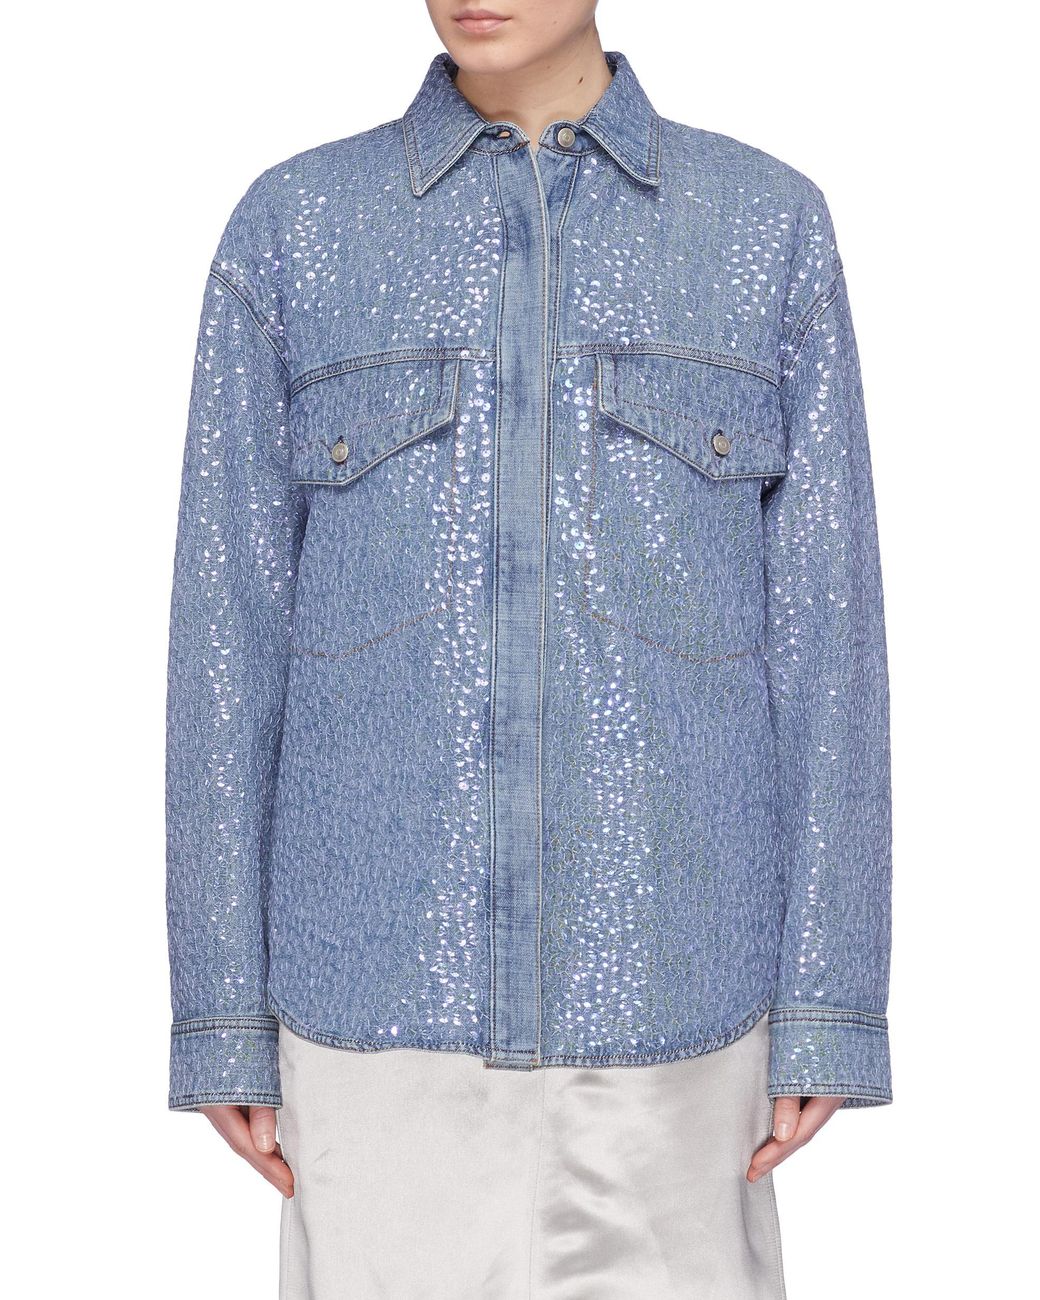 Acne Studios 'raehmon' Sequin Embroidered Denim Shirt in Blue | Lyst